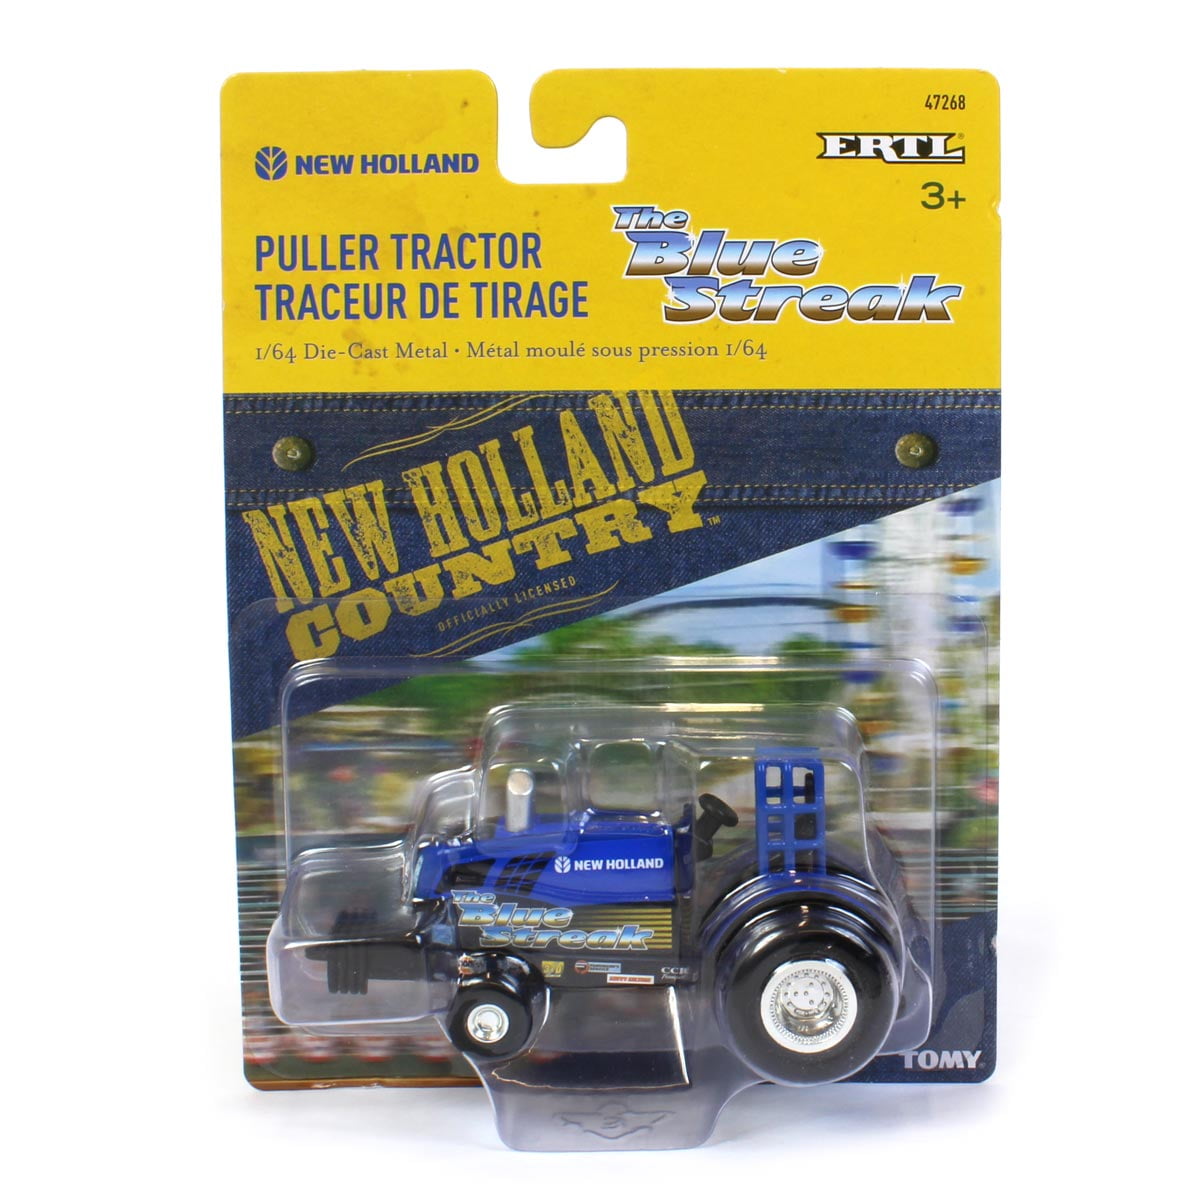 1/64 Ertl New Holland The Blue Streak Pulling Tractor 